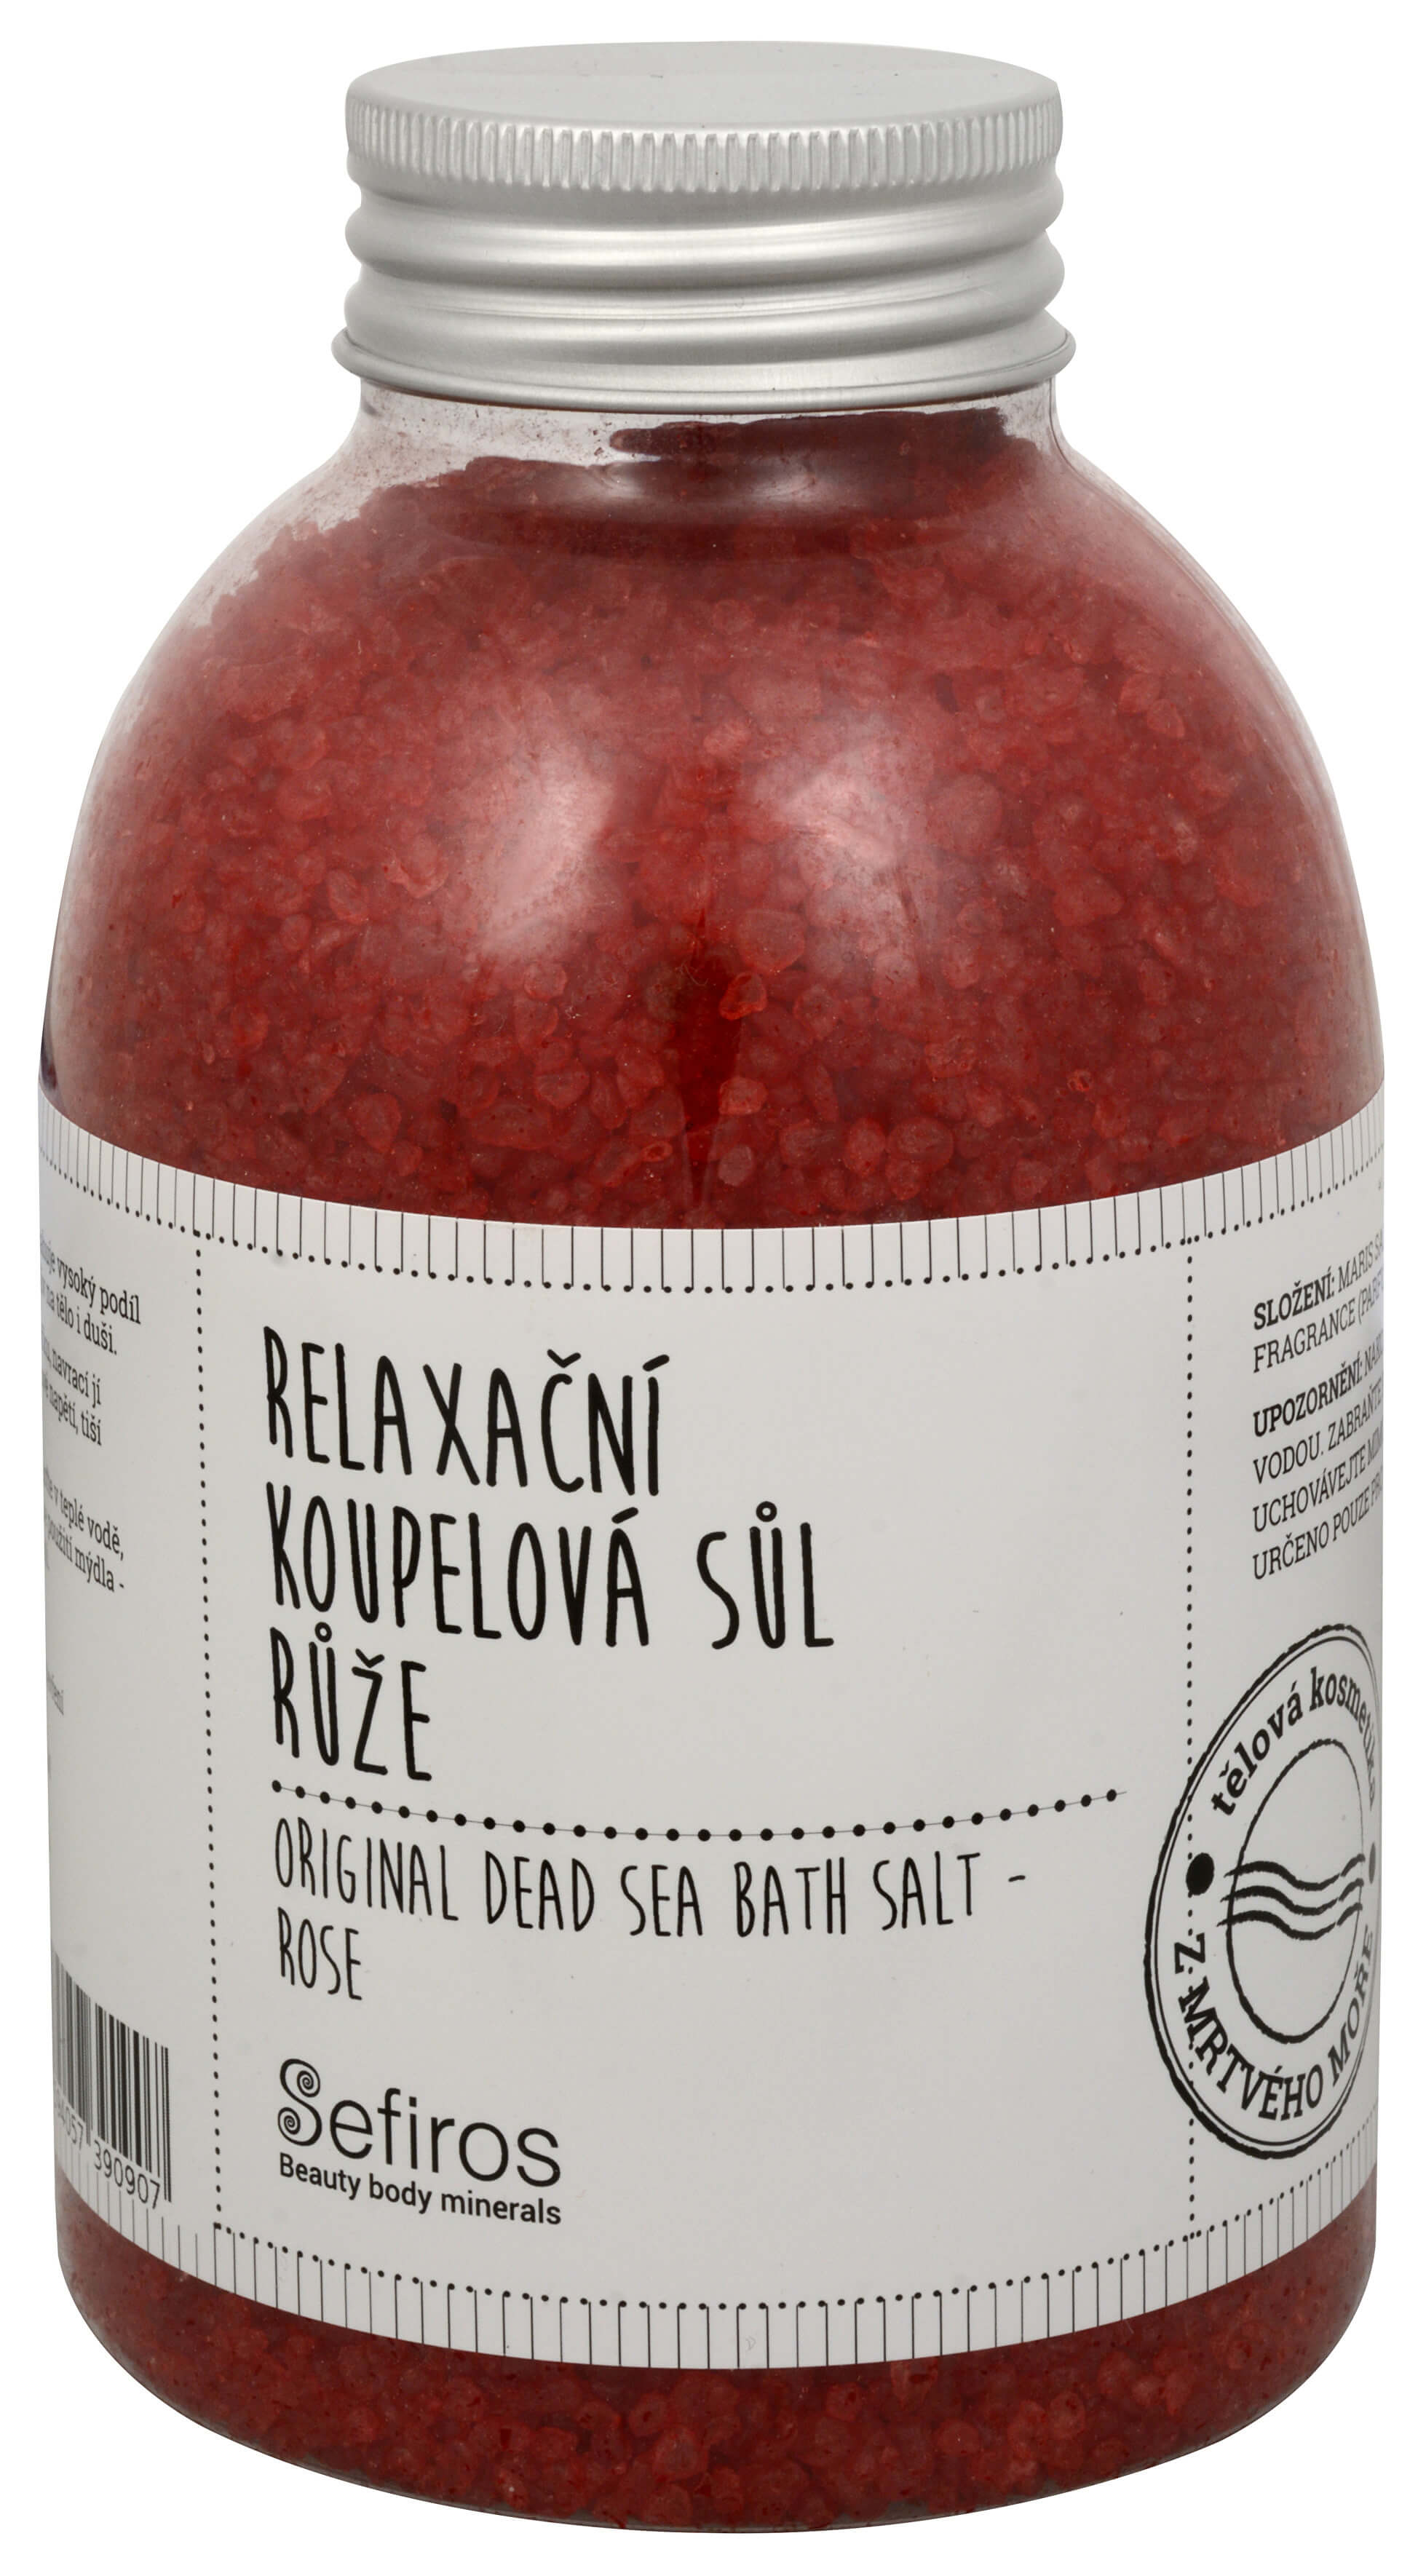 Sefiross Relaxační koupelová sůl Růže (Original Dead Sea Bath Salt) 500 g